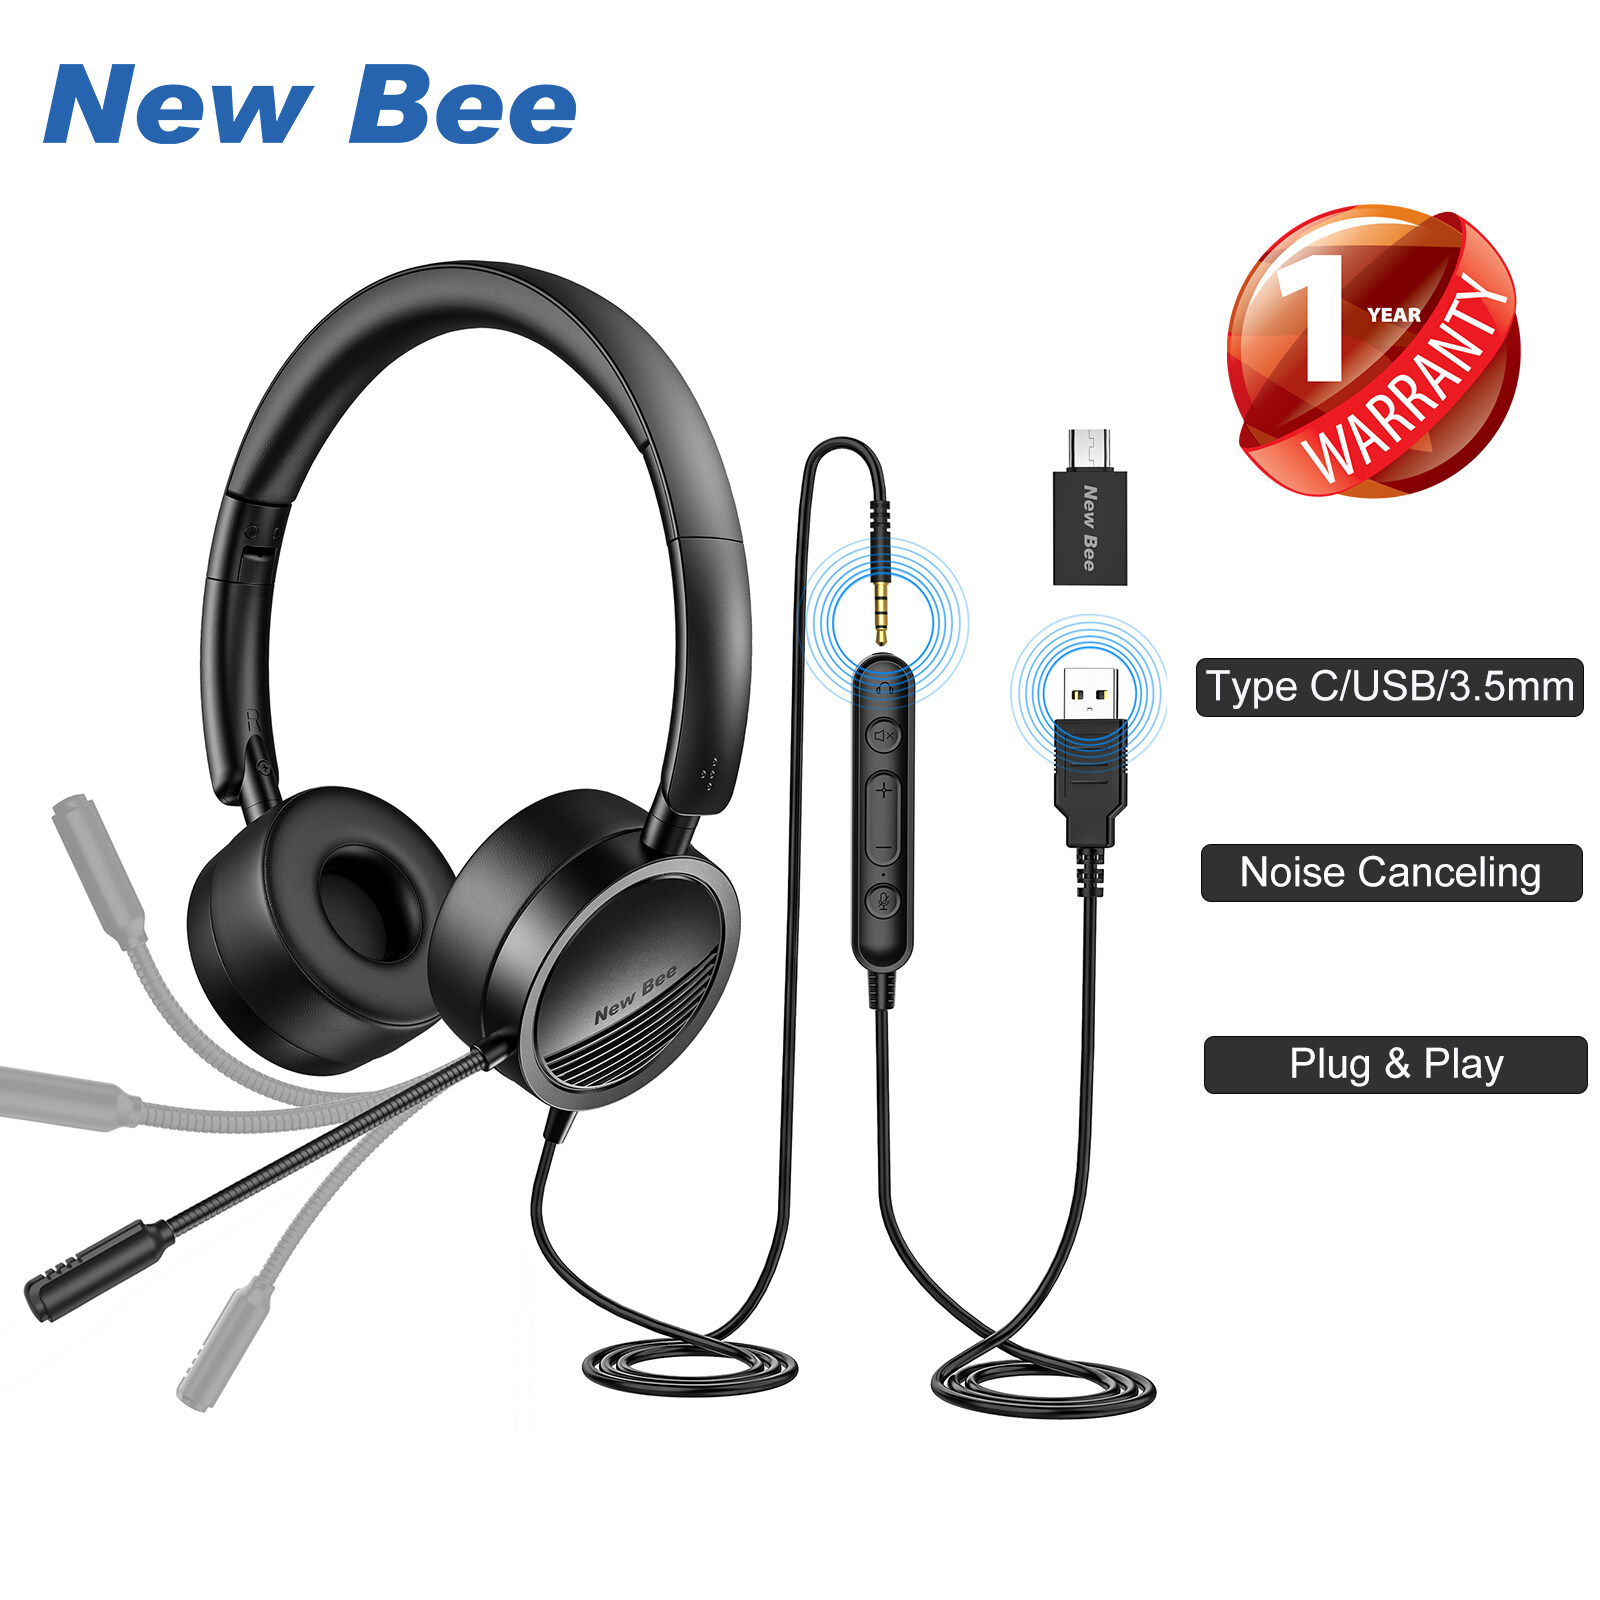 New Bee H360 3.5mm jack&USB หูฟัง หูฟังครอบหู หูฟังมีไมค์ หูฟังโทรศัพท์ หูฟังมีสาย ลดเสียงรบกวน น้ำหนักเบาสบายสพับเก็บเองได้for Mac Zoom Skype YouTube Study Call Center Headphone